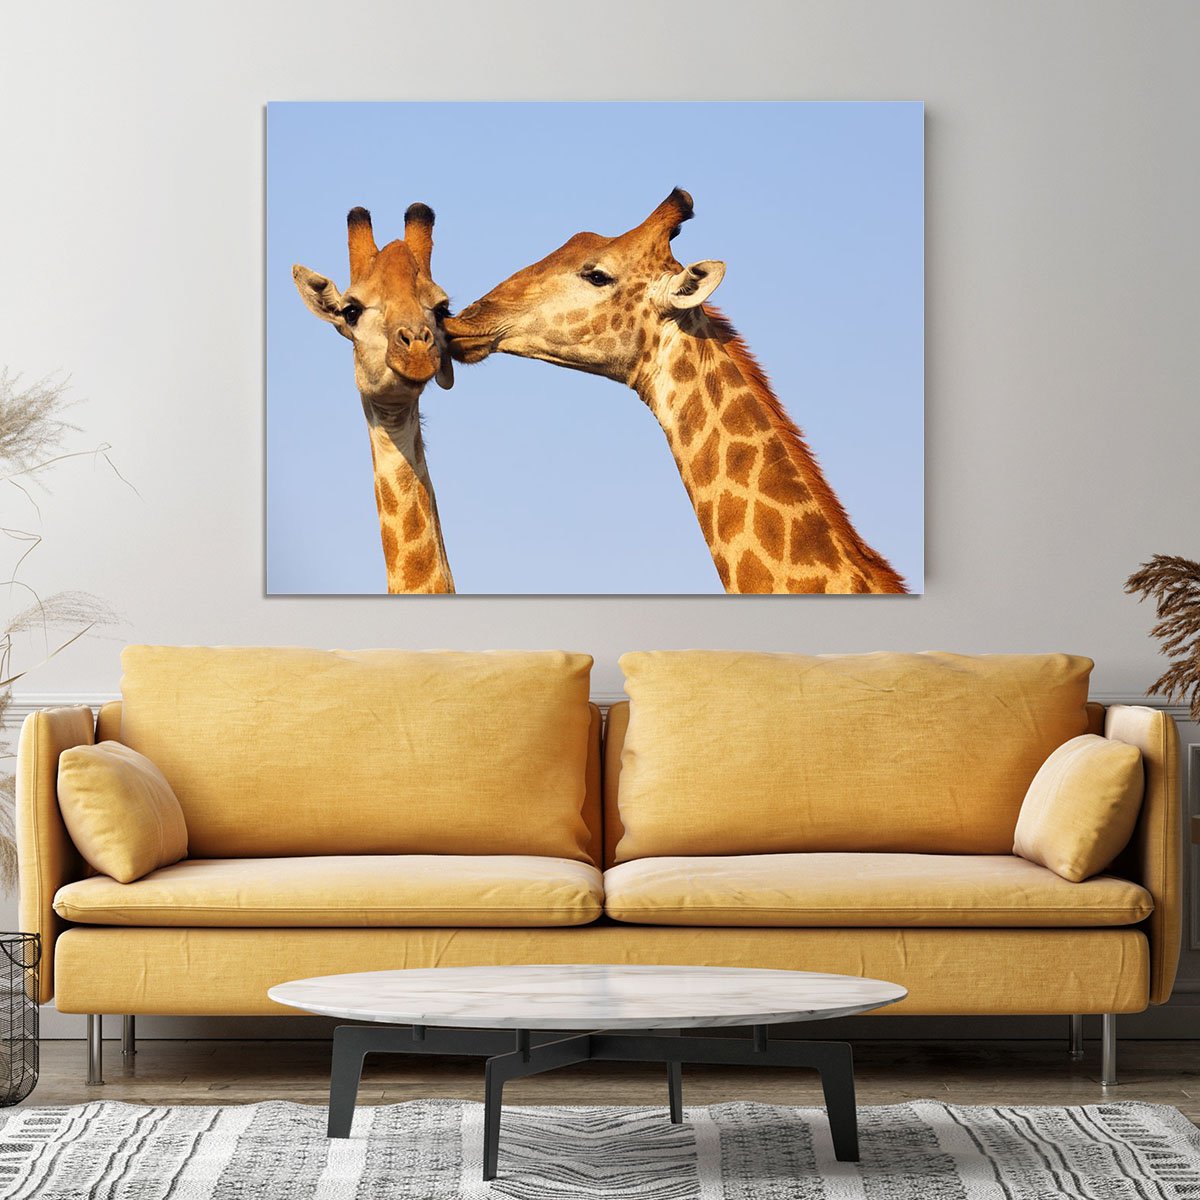 Giraffe pair bonding Canvas Print or Poster